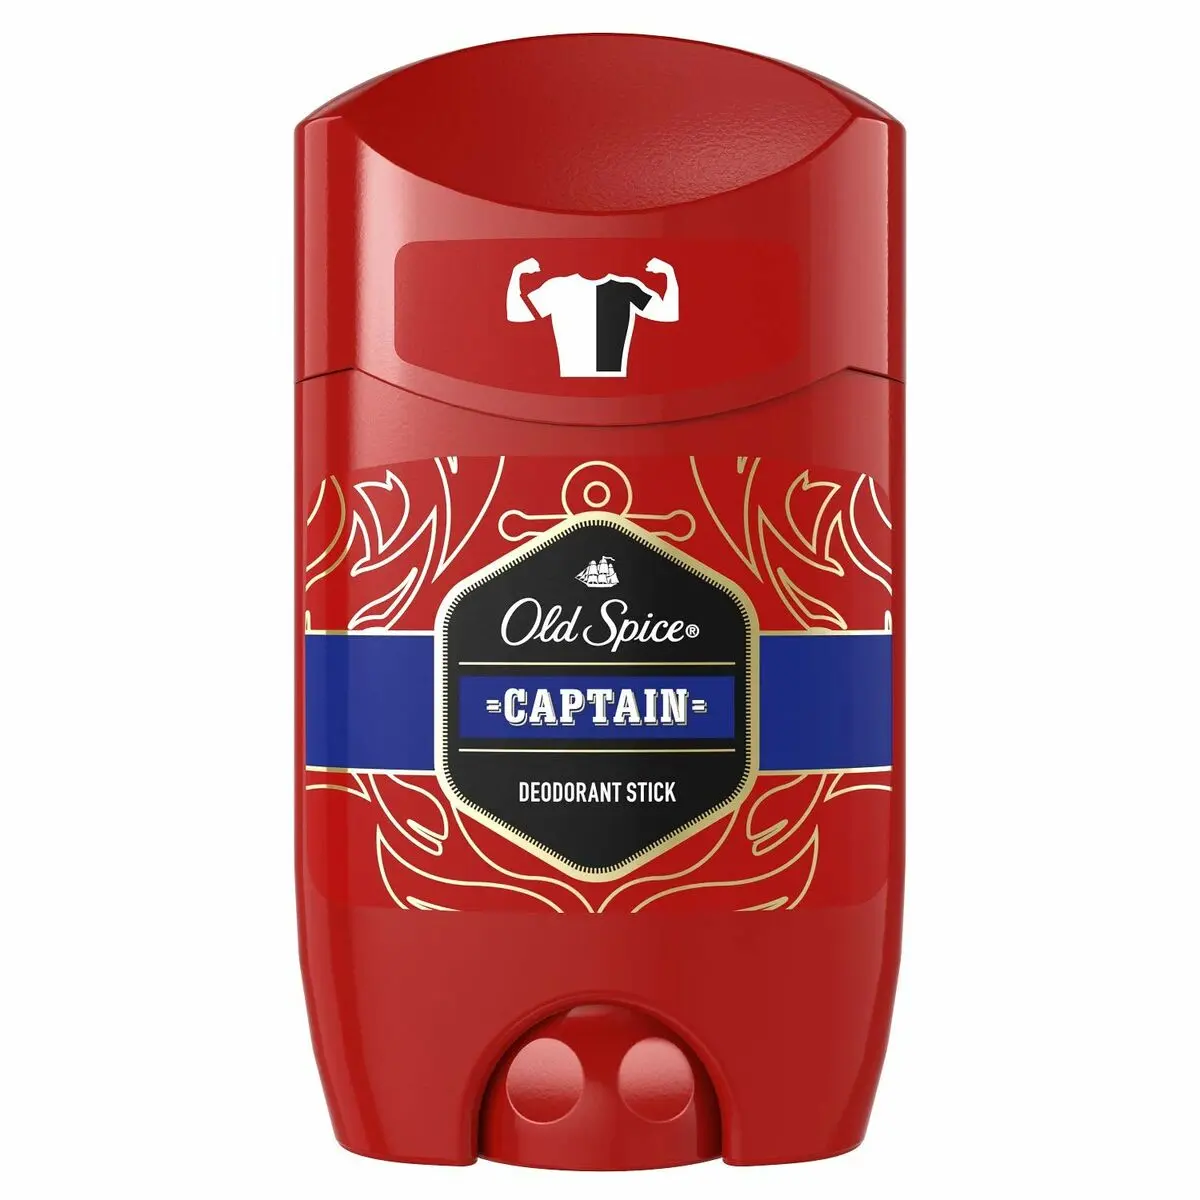 Deodorante Stick Old Spice Captain 50 ml